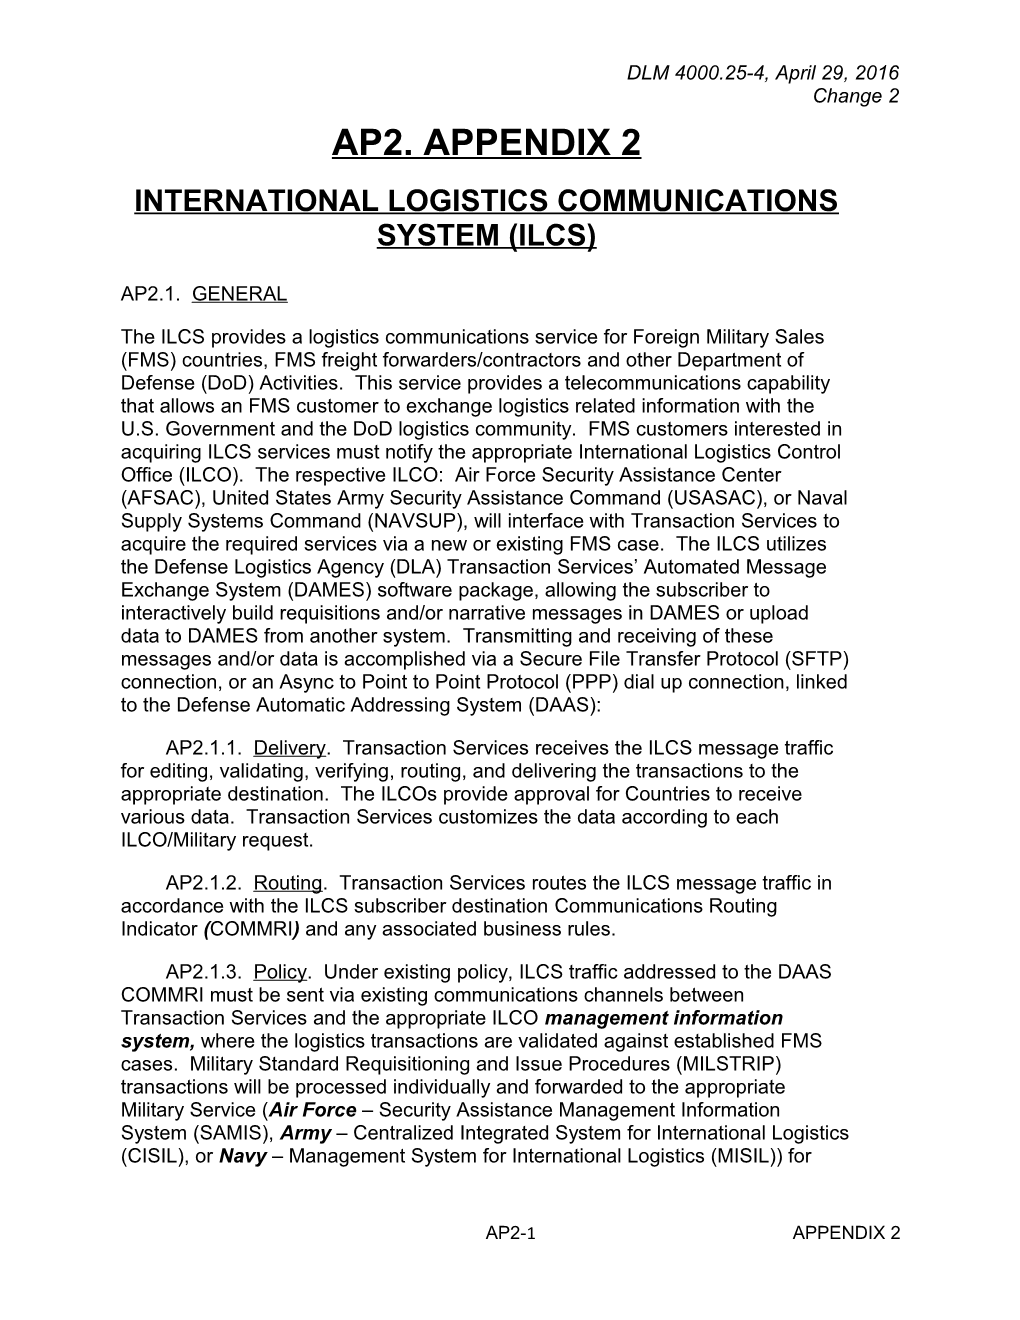 Appendix 2 - International Logistics Communications System